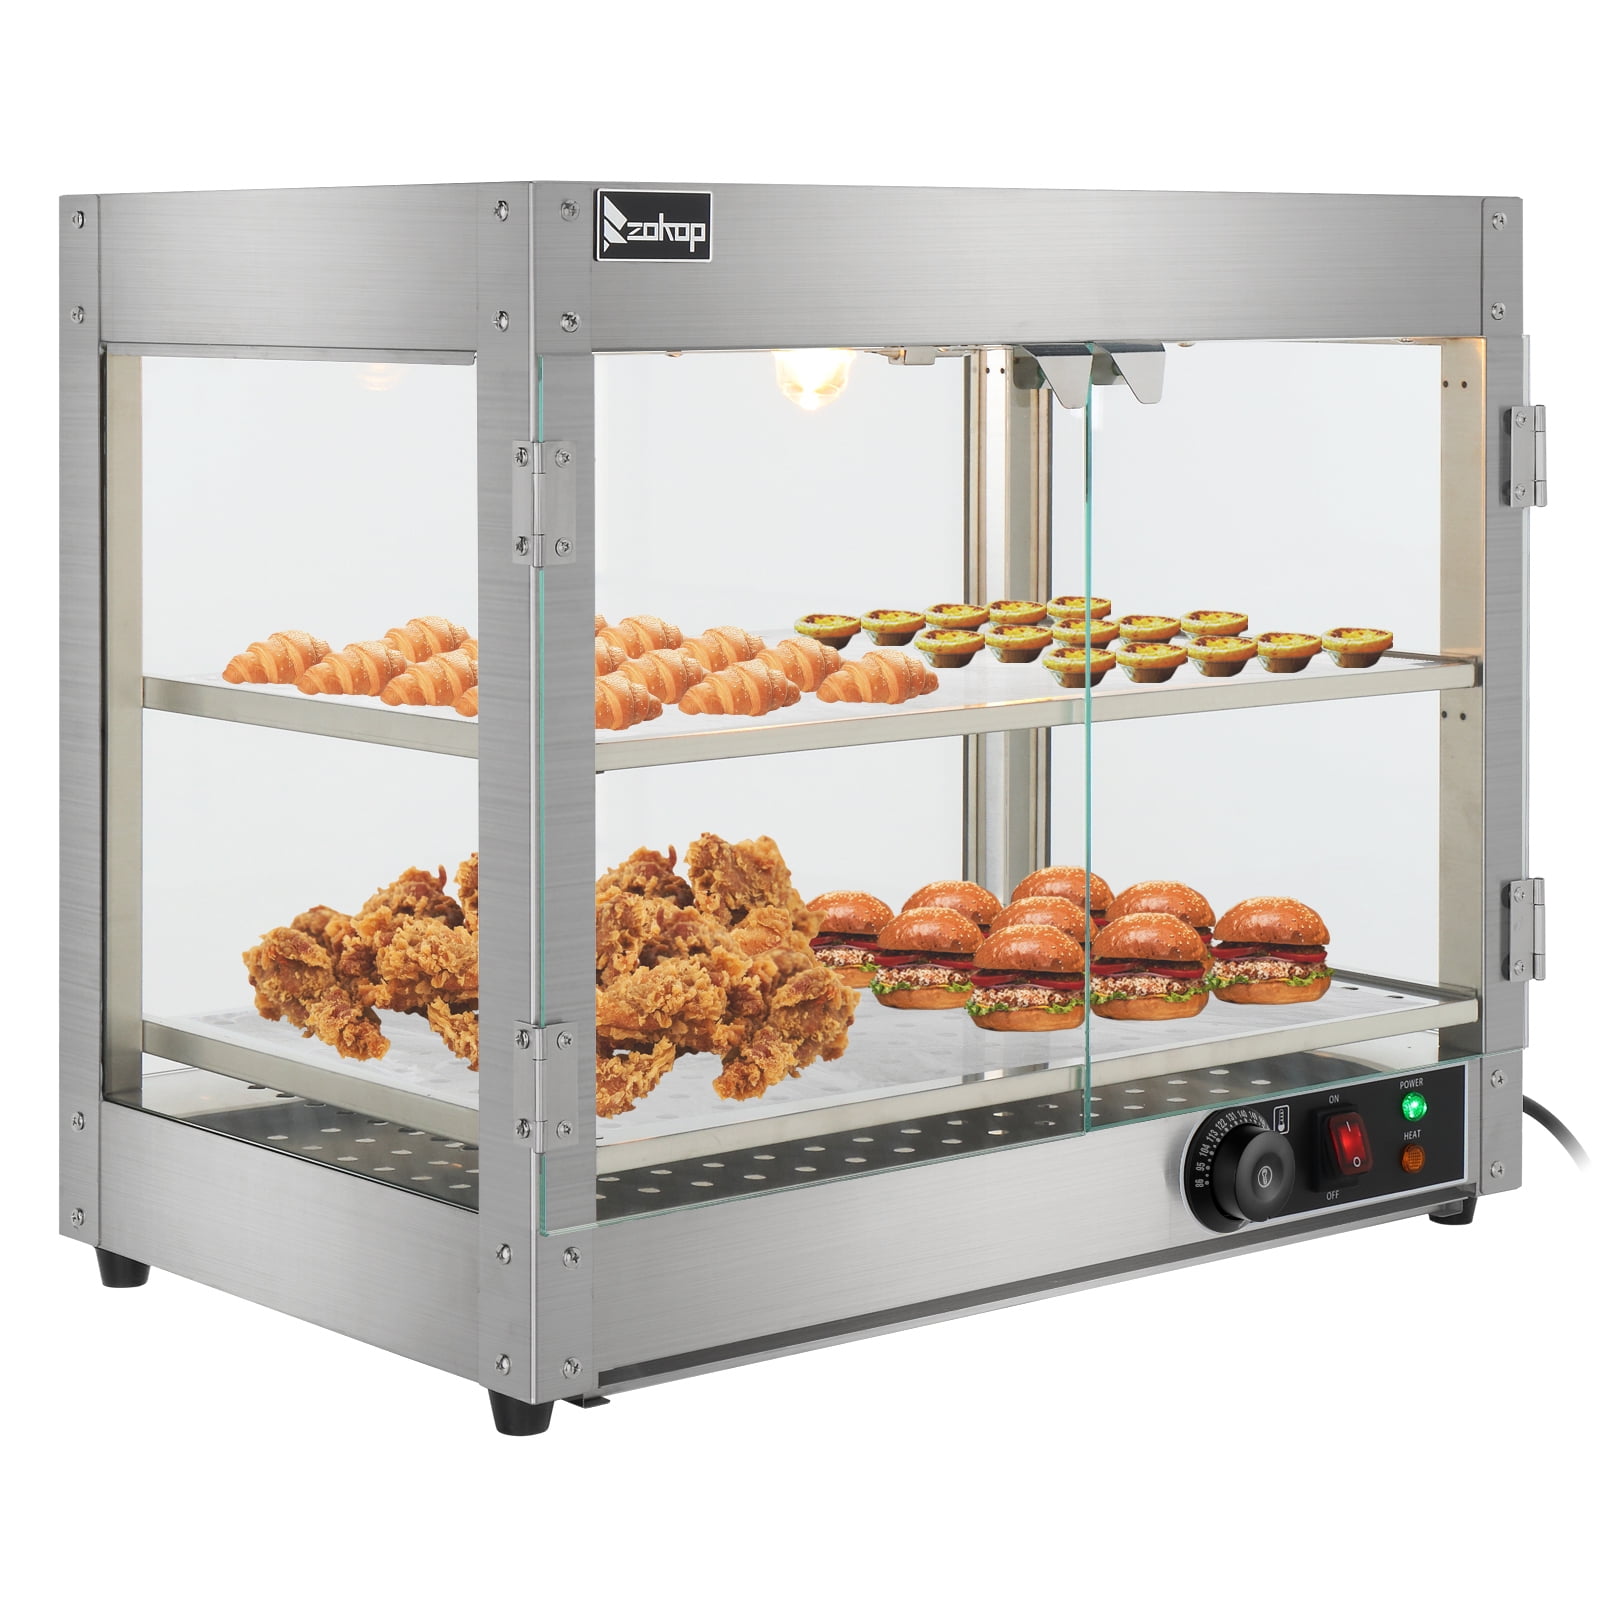 Dual Layers Commercial Countertop Food Warmer Display TT-WE57B